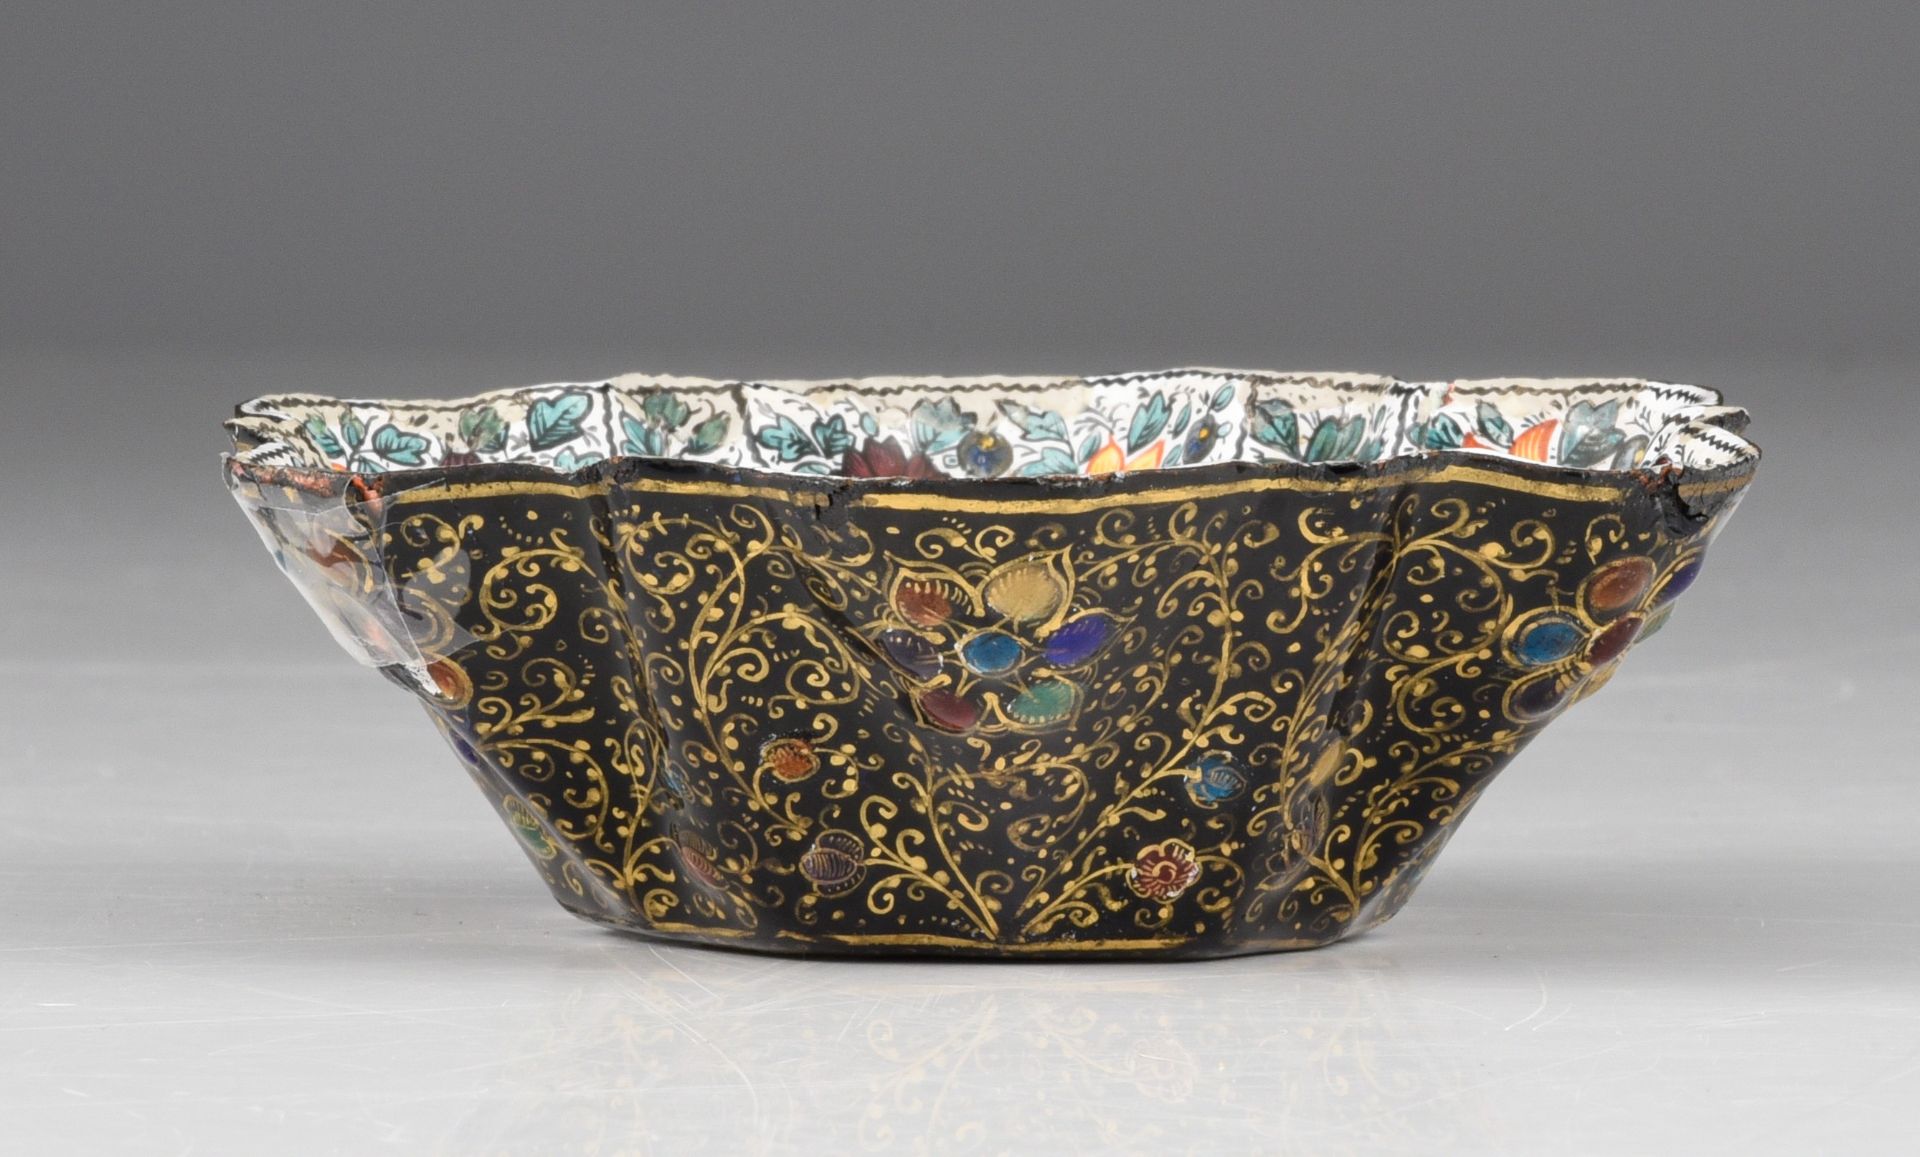 A Limoges enamel bowl (19thC) and 2 Limoges enamel plaques, (16thC), H 4,2 / 12,5 x 7,5 cm - Image 13 of 20